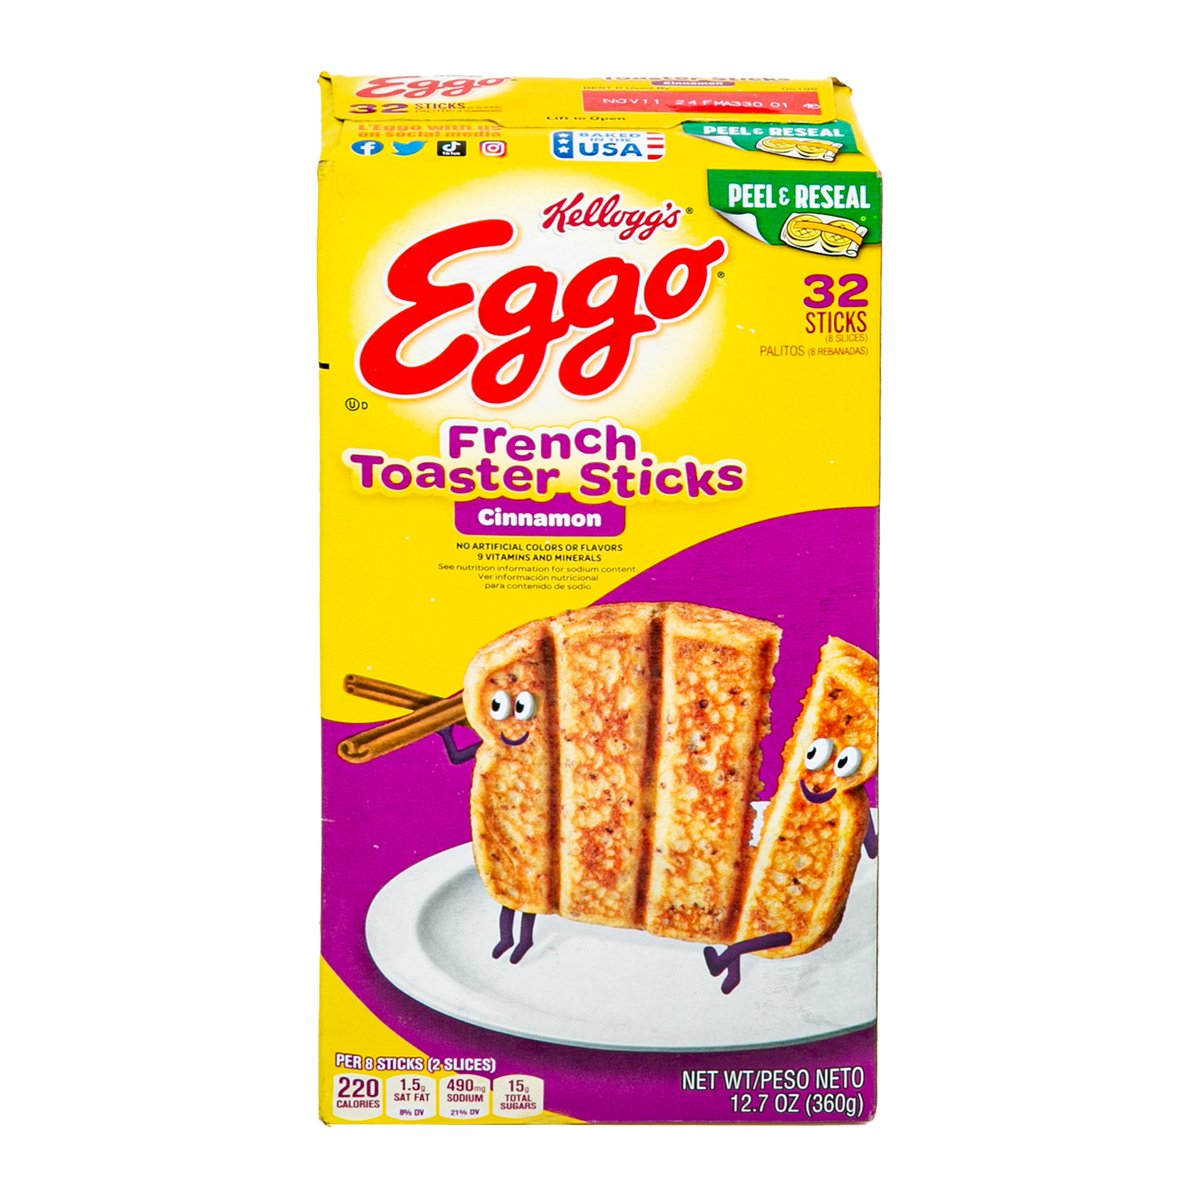 Kellogg's Eggo French Toaster Sticks Cinnamon 32 pcs 360 g